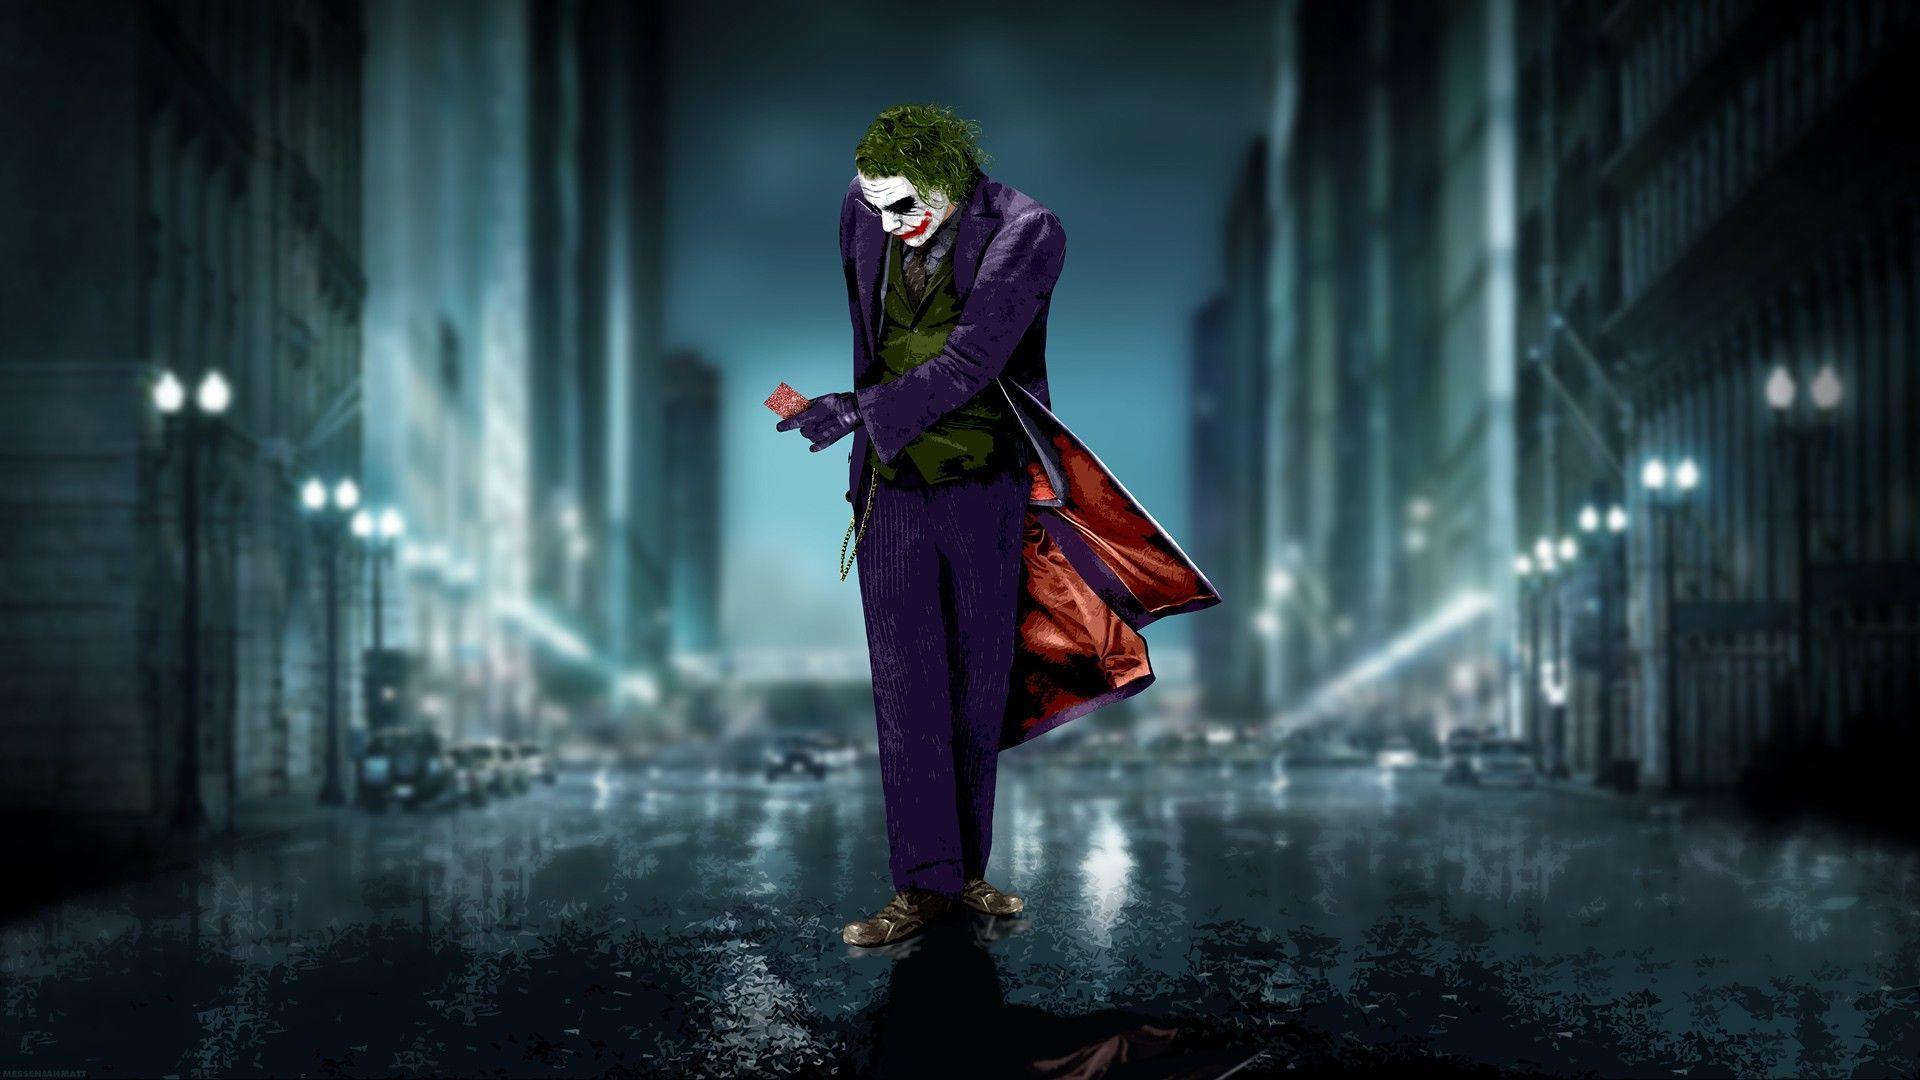 Download Full HD 1080p Joker Wallpaper HD